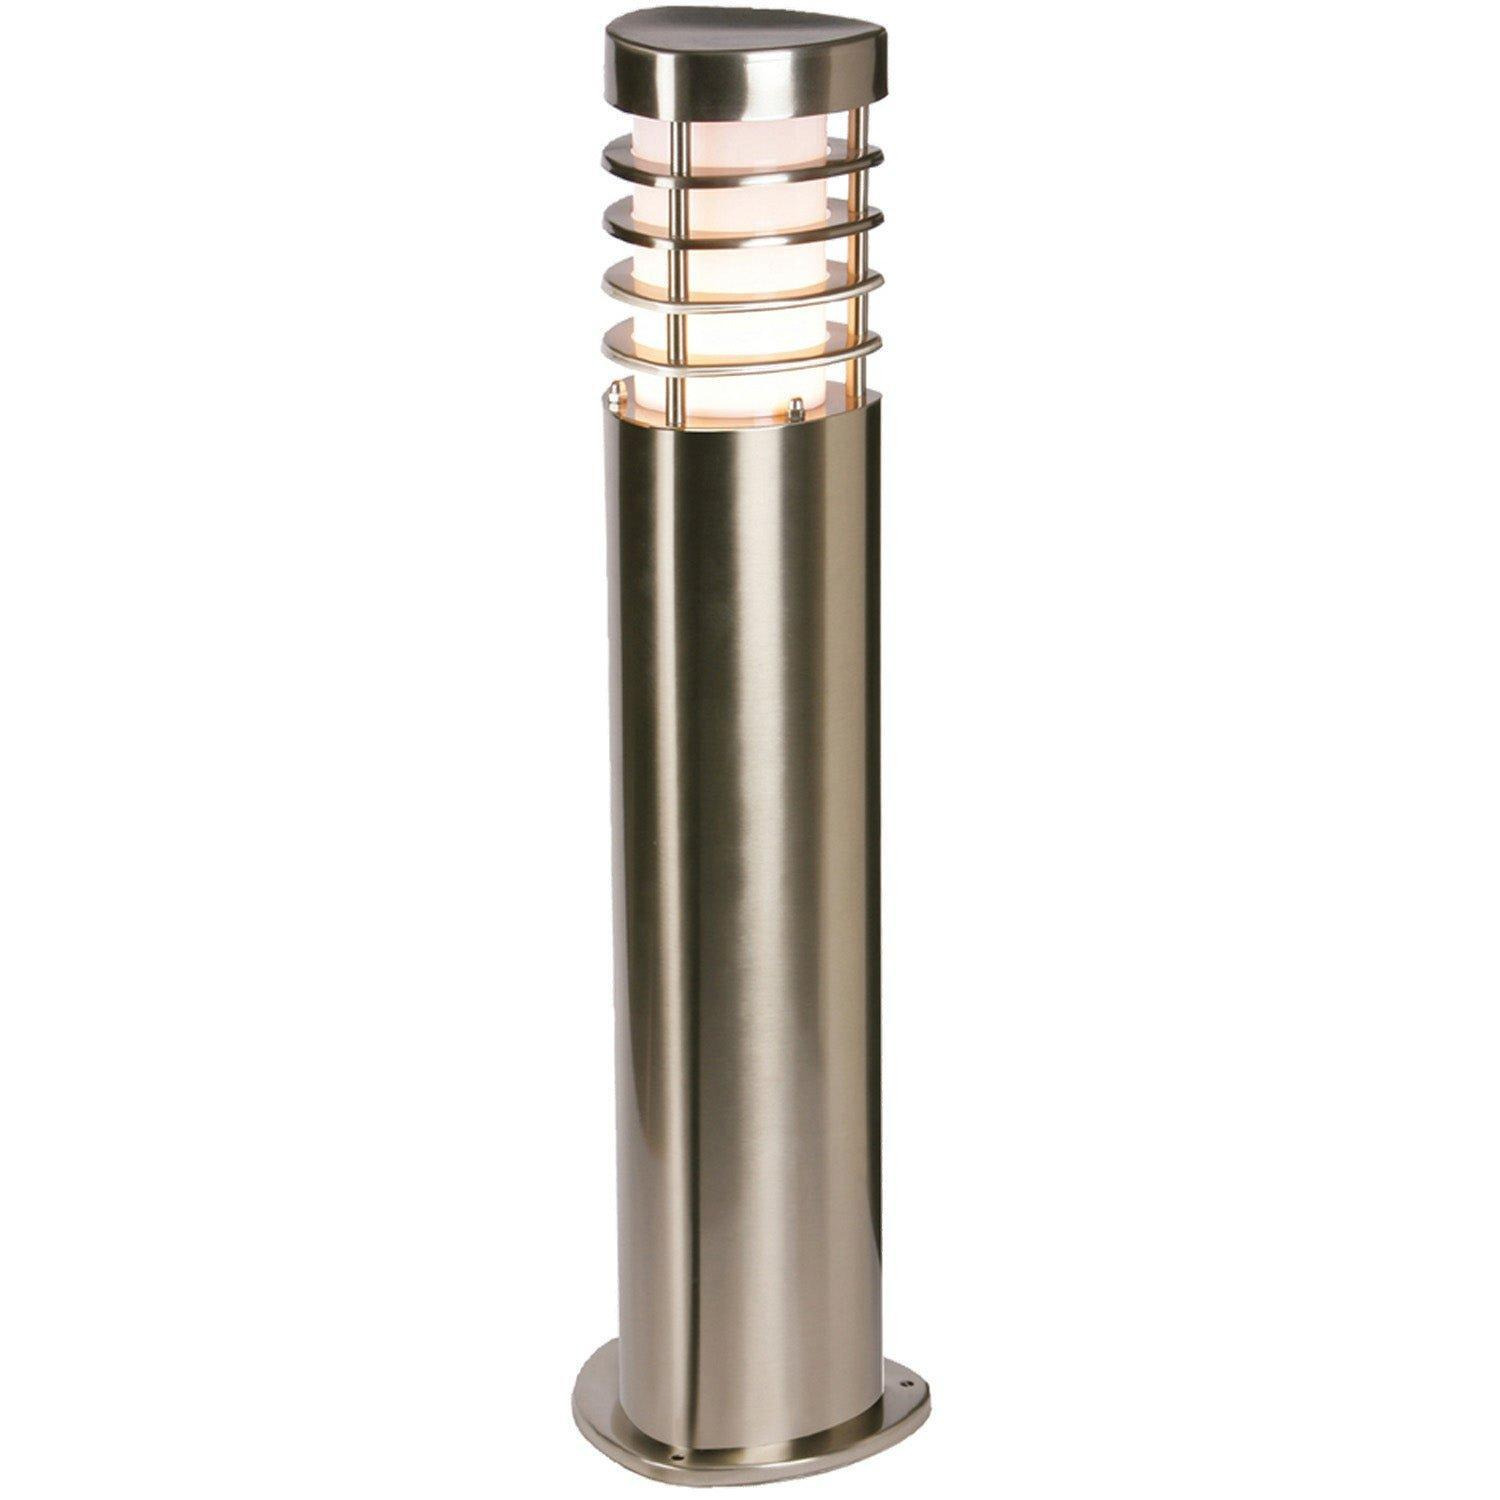 Modern Outdoor Bollard Light - 10.5W E27 LED - 500mm Height - Stainless Steel - image 1